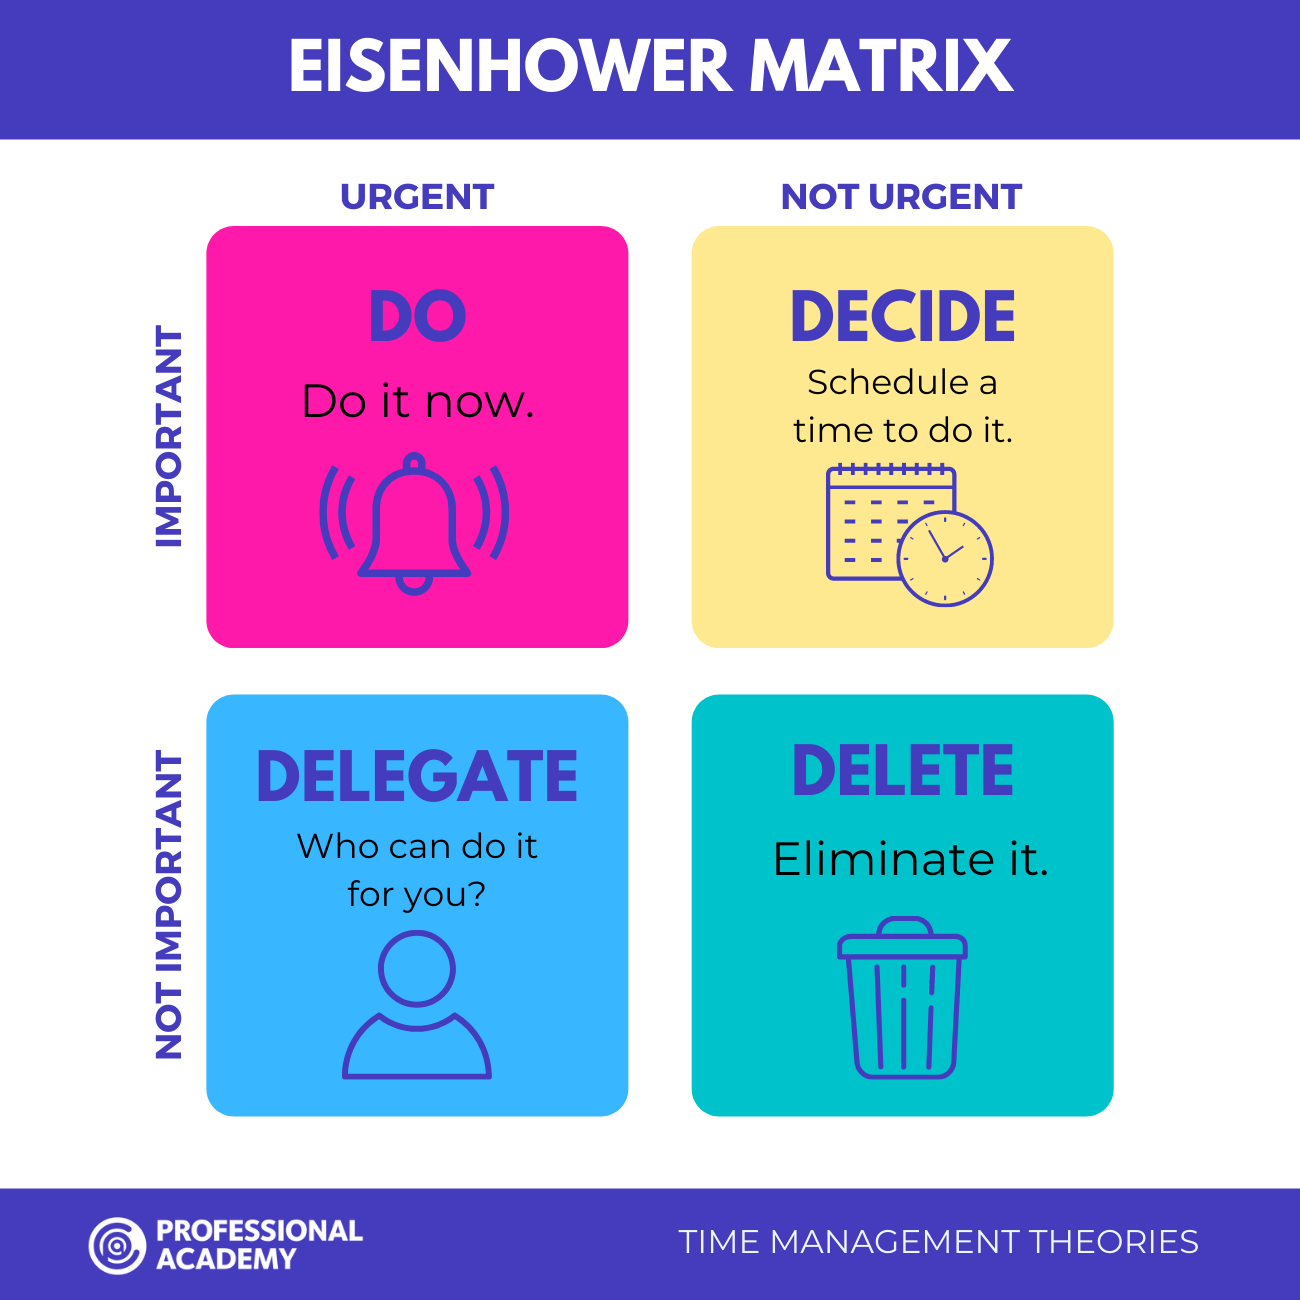 Eisenhower Matrix time management